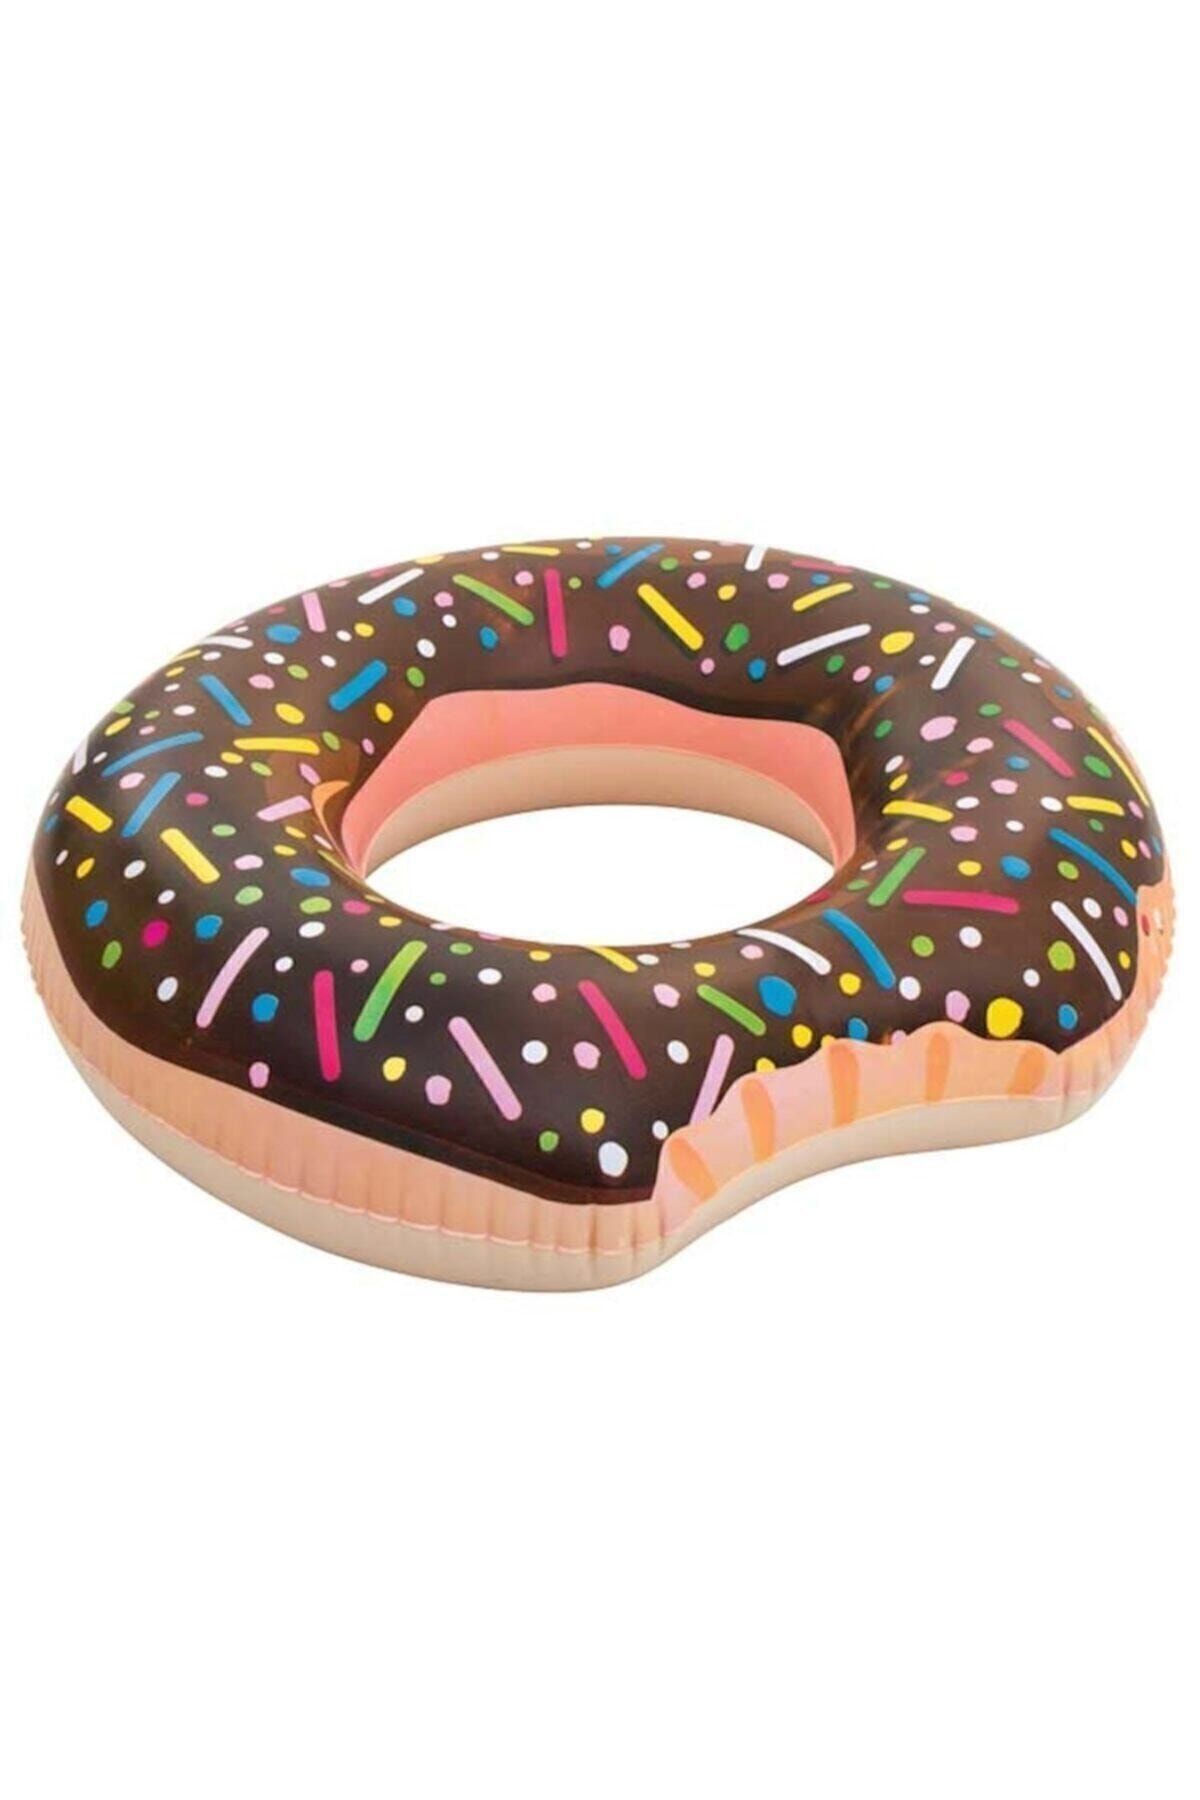 Bestway Donut Simit 107 Cm - 36118.